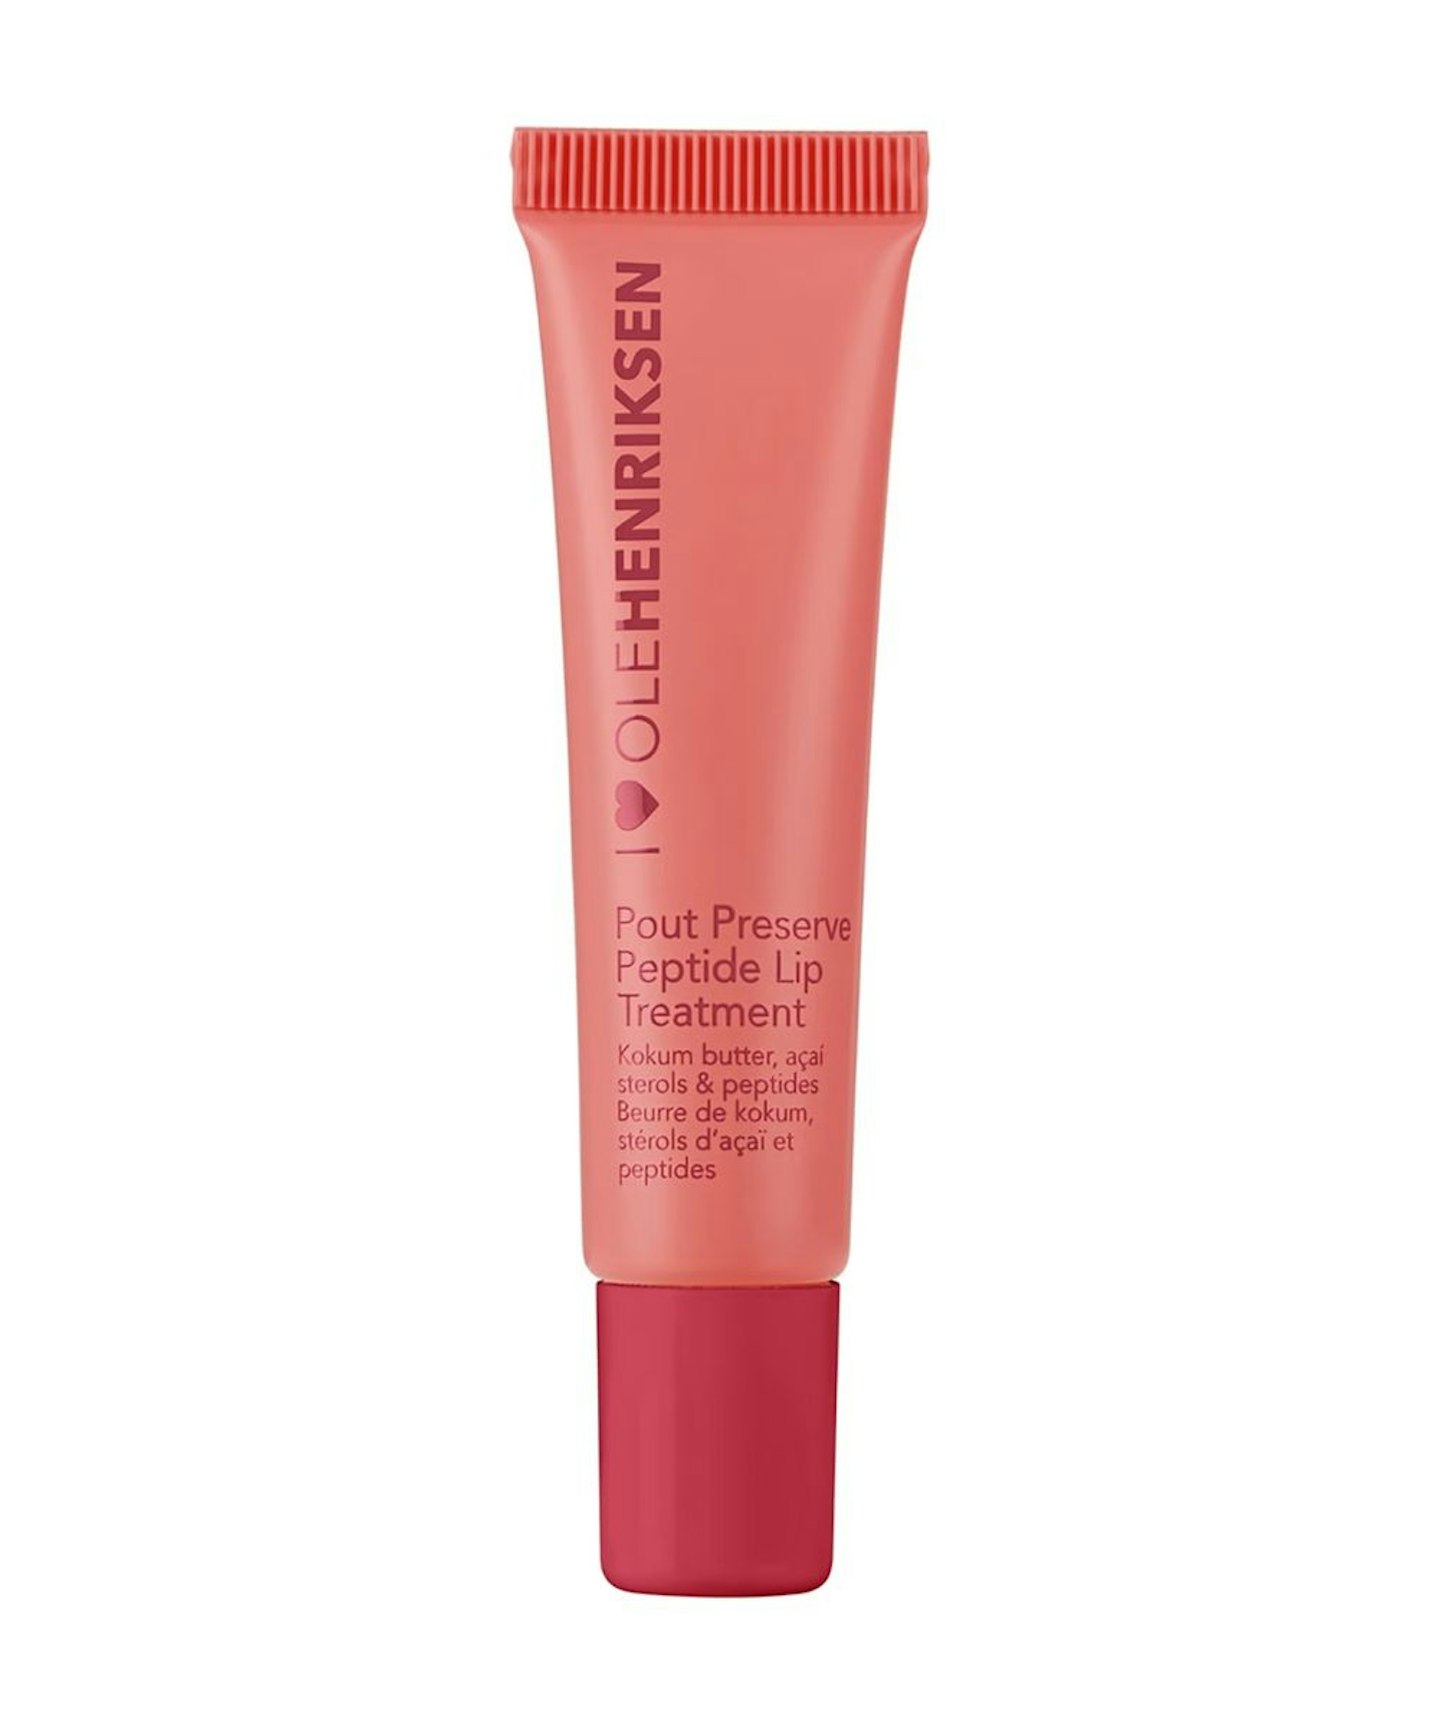 Ole Henriksen Exclusive Pout Preserve Peptide Lip Treatment - Strawberry Sorbet 